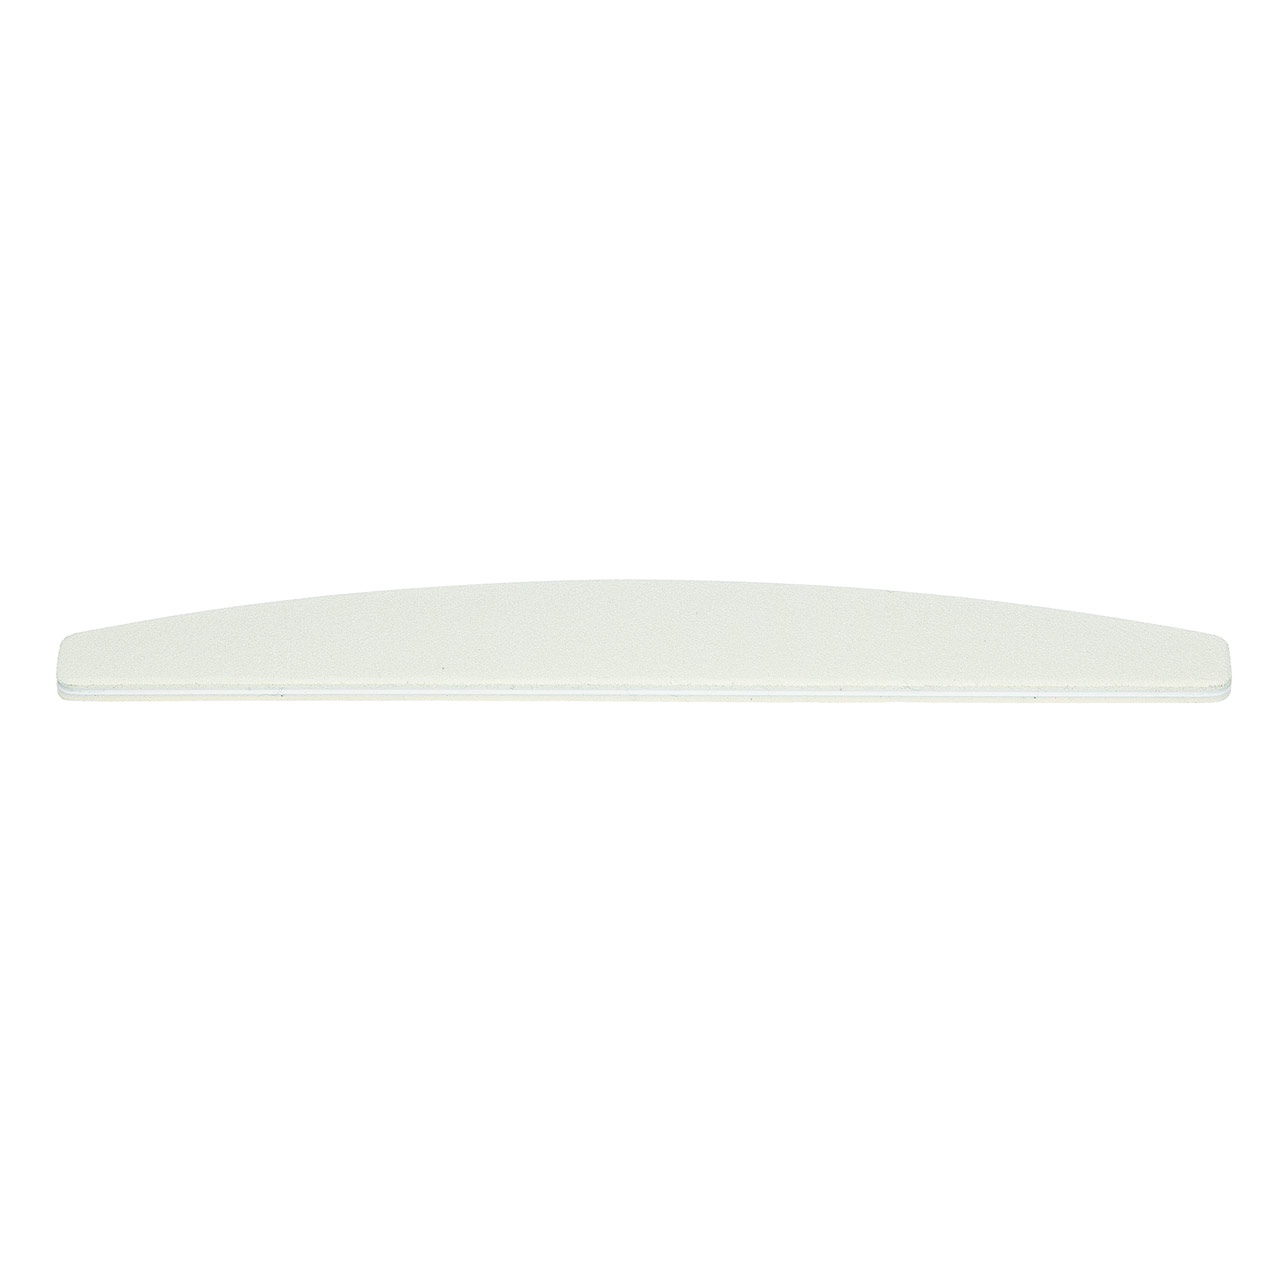 BAEHR BEAUTY CONCEPT - NAILS Profifeile Bow "WEISS" mit Logo Körnung 100/180, 18cm